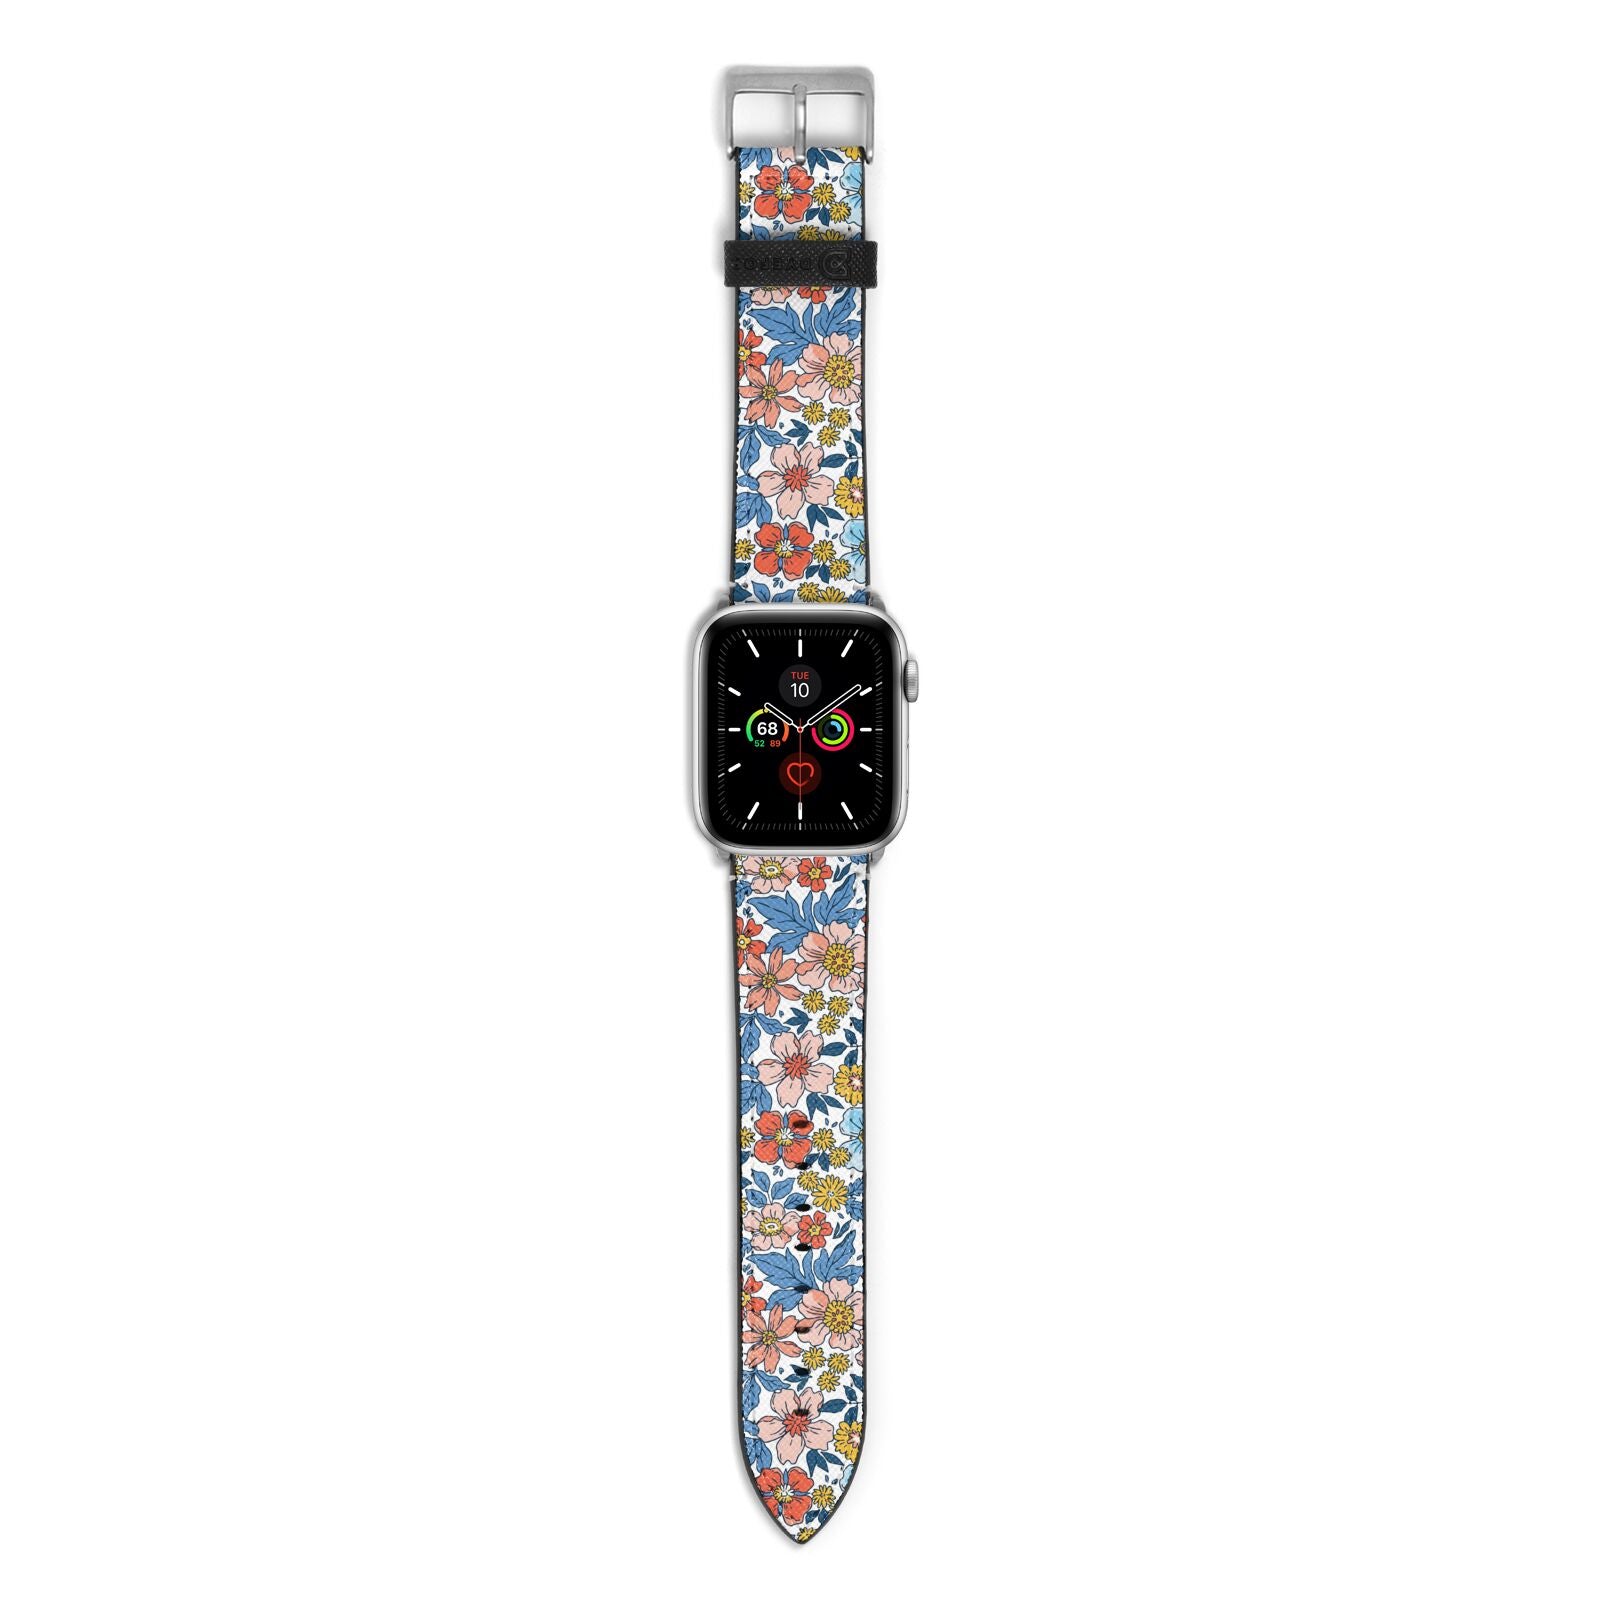 Vintage Flower Apple Watch Strap with Silver Hardware